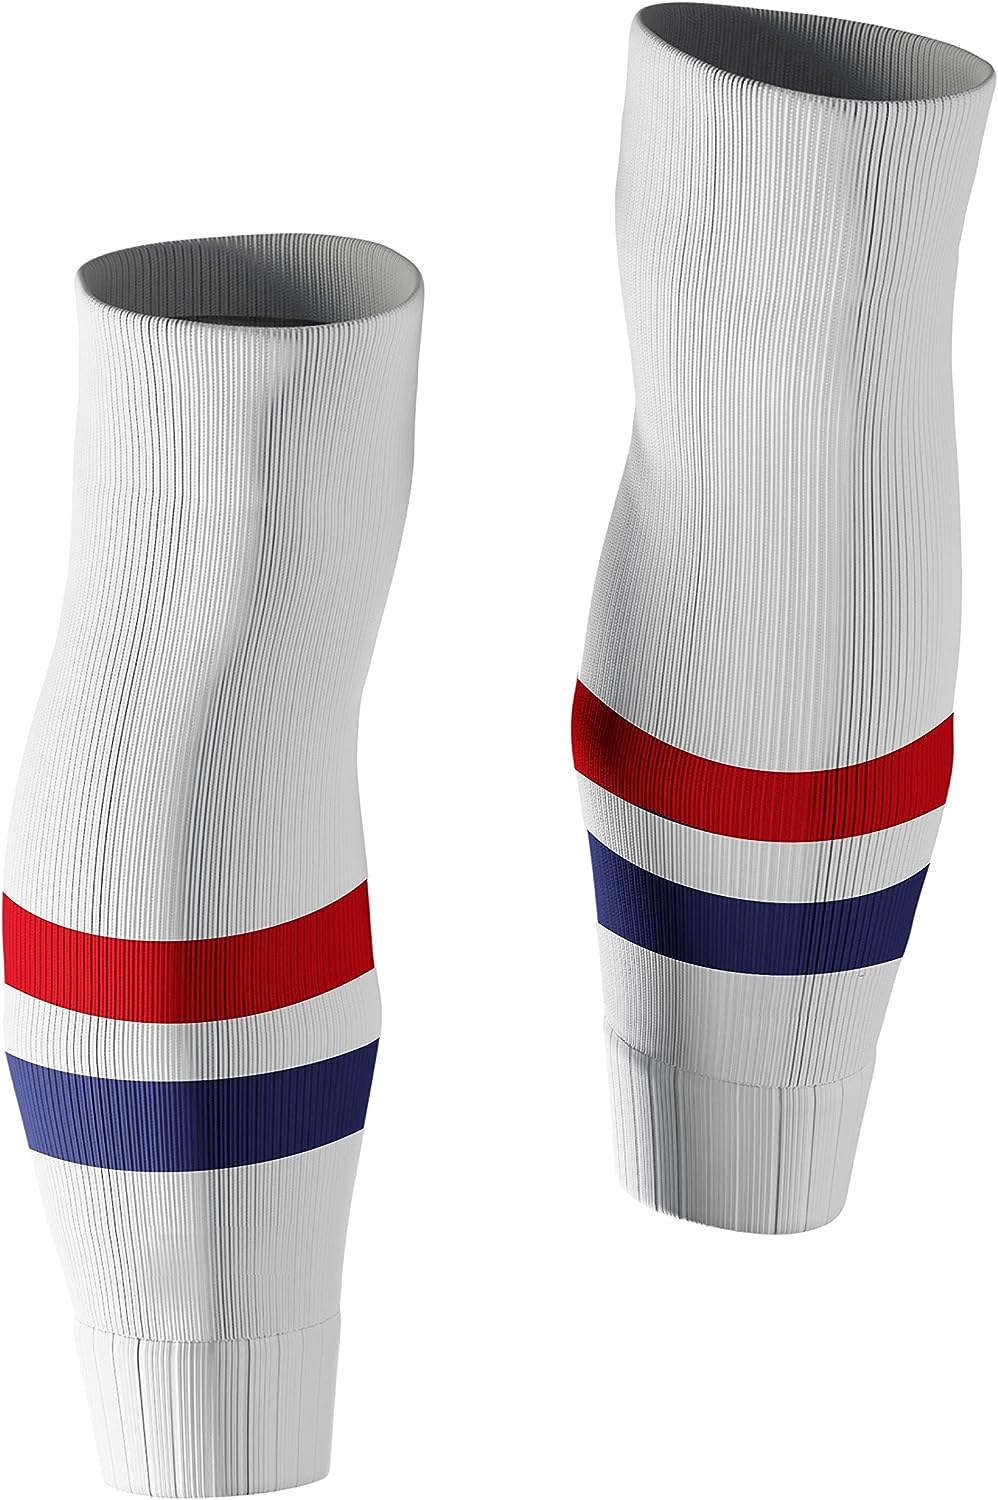 Tekkerz Leg Sleeve Compatible with Grip Socks Best Alternative to Soccer,  Football, Hockey, Rugby Athletic Socks